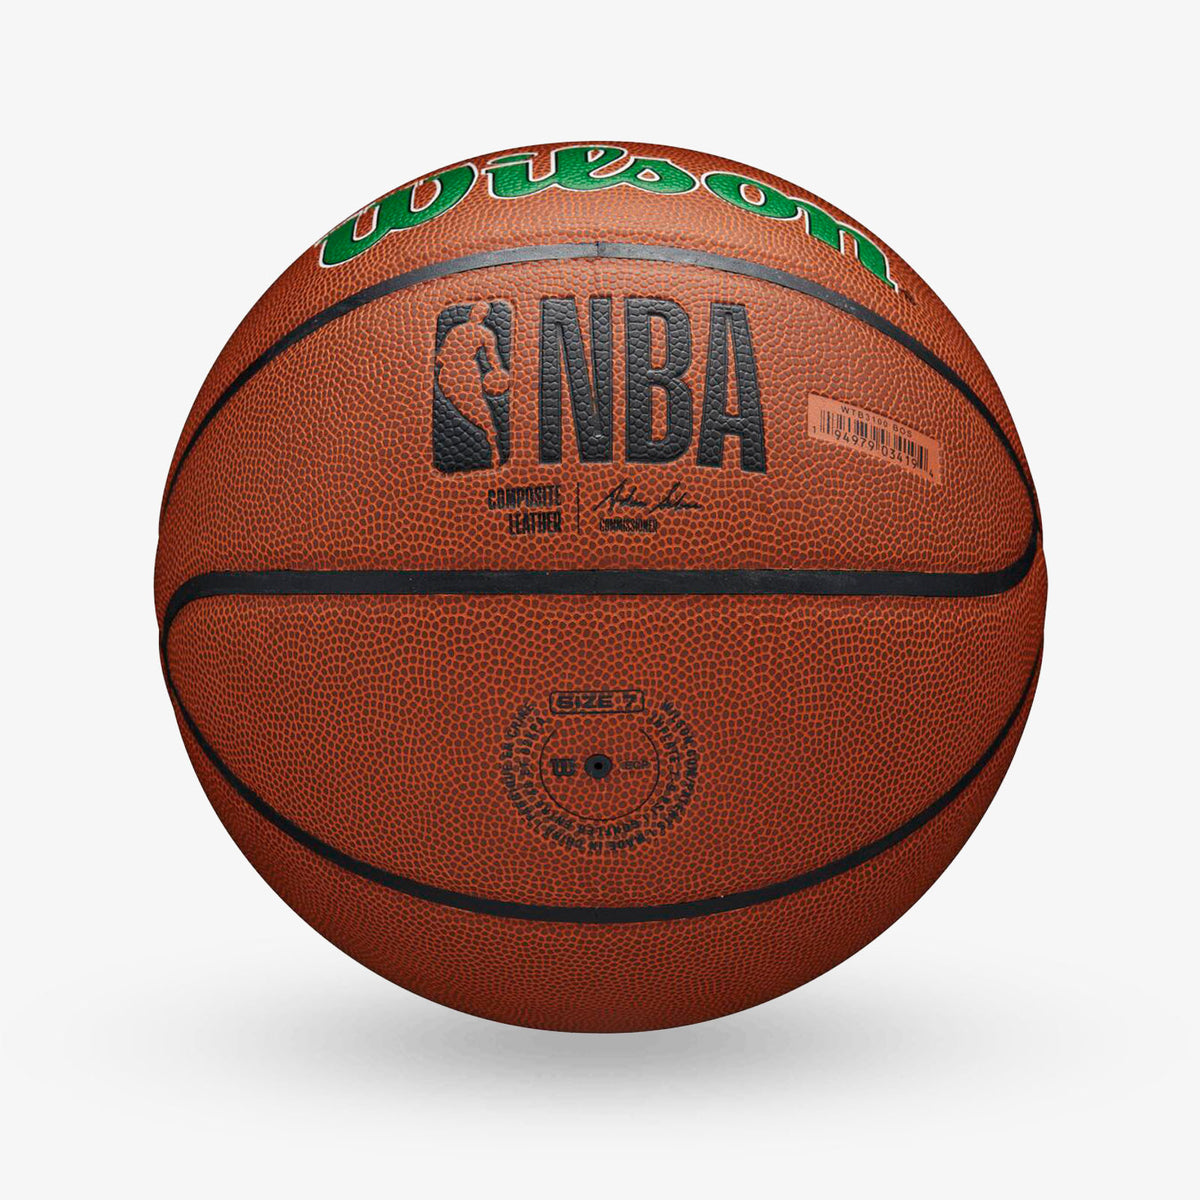 Boston Celtics NBA Team Alliance Basketball - Size 7